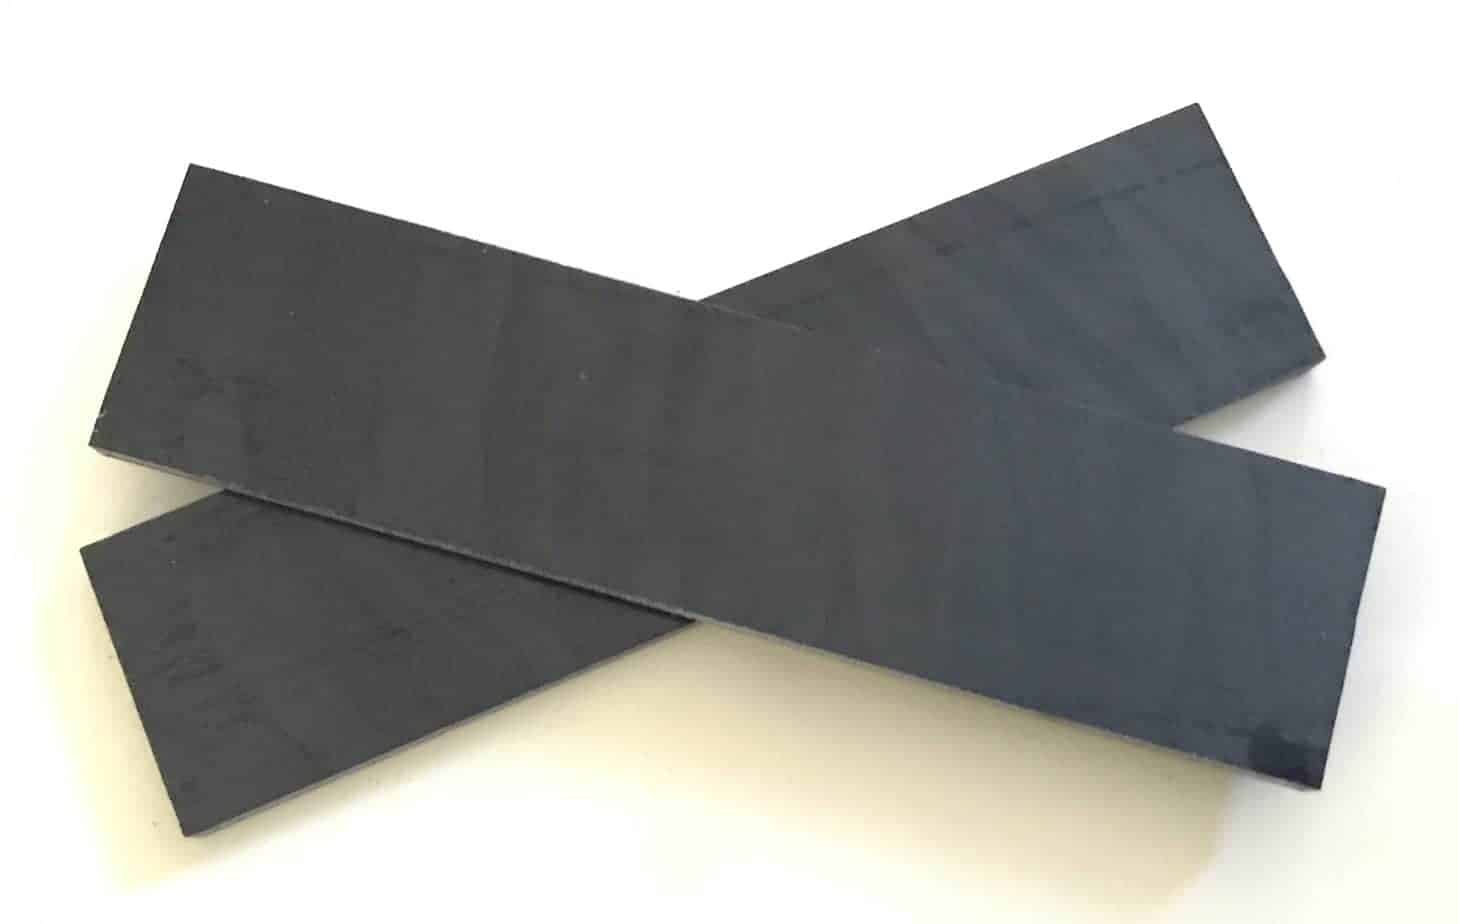 Kirinite Black Magic Knife Scales - Set of 2 - UK Pen Blanks